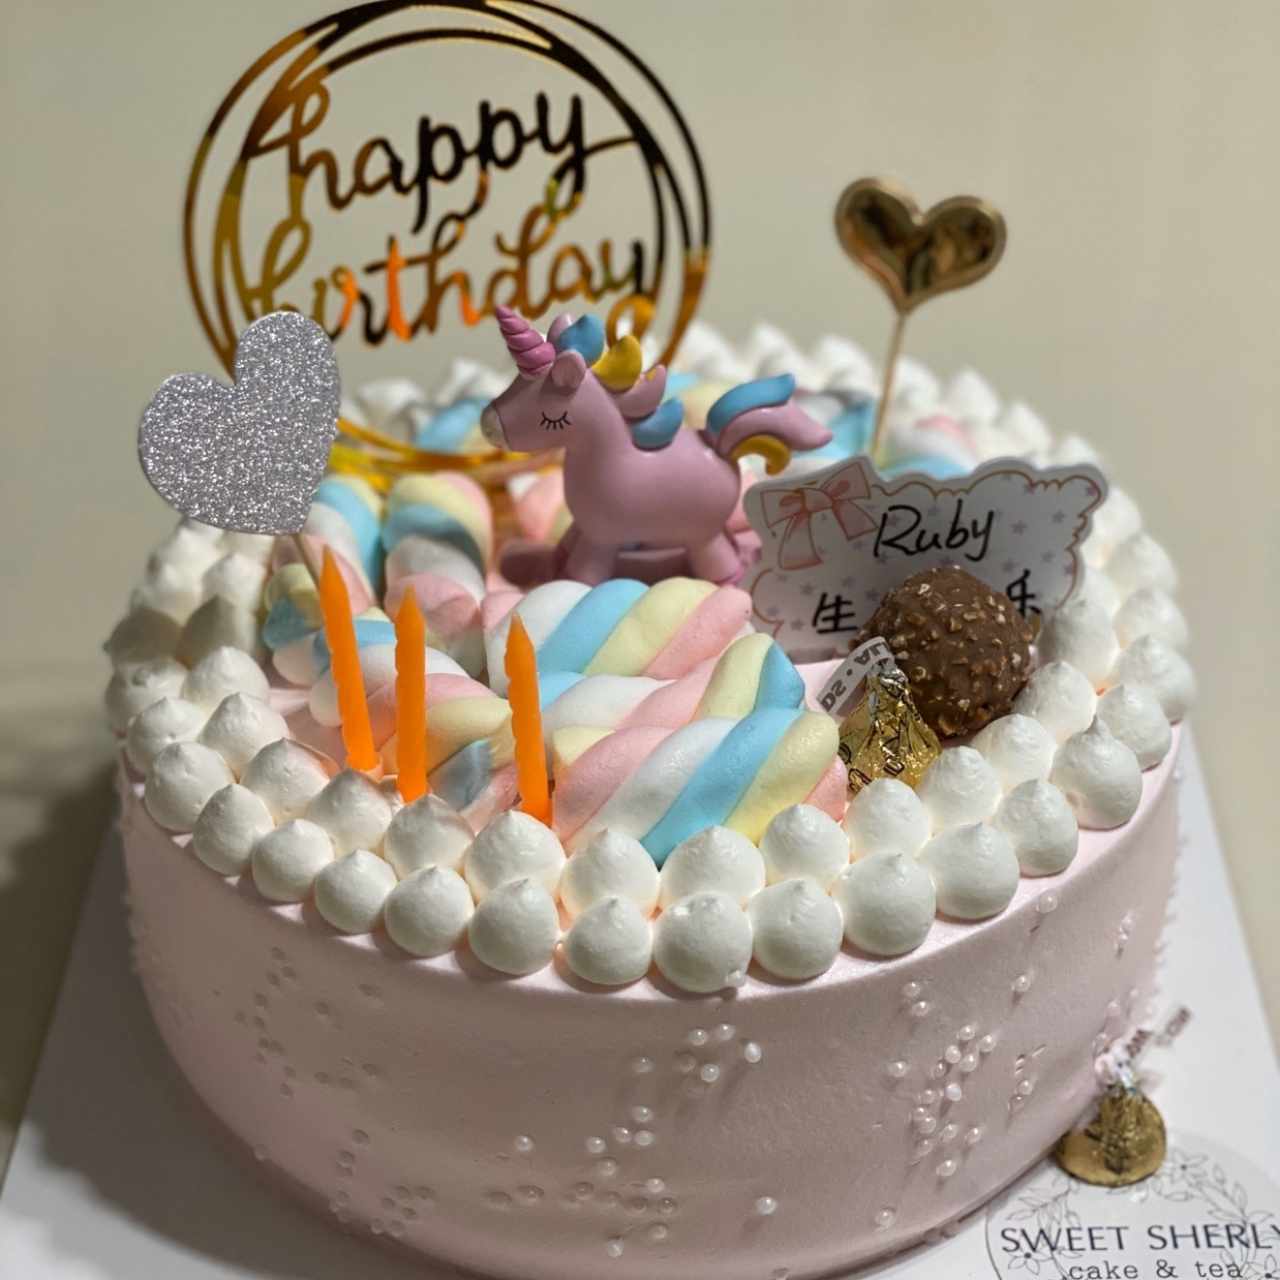 Birthday Cake de 8”